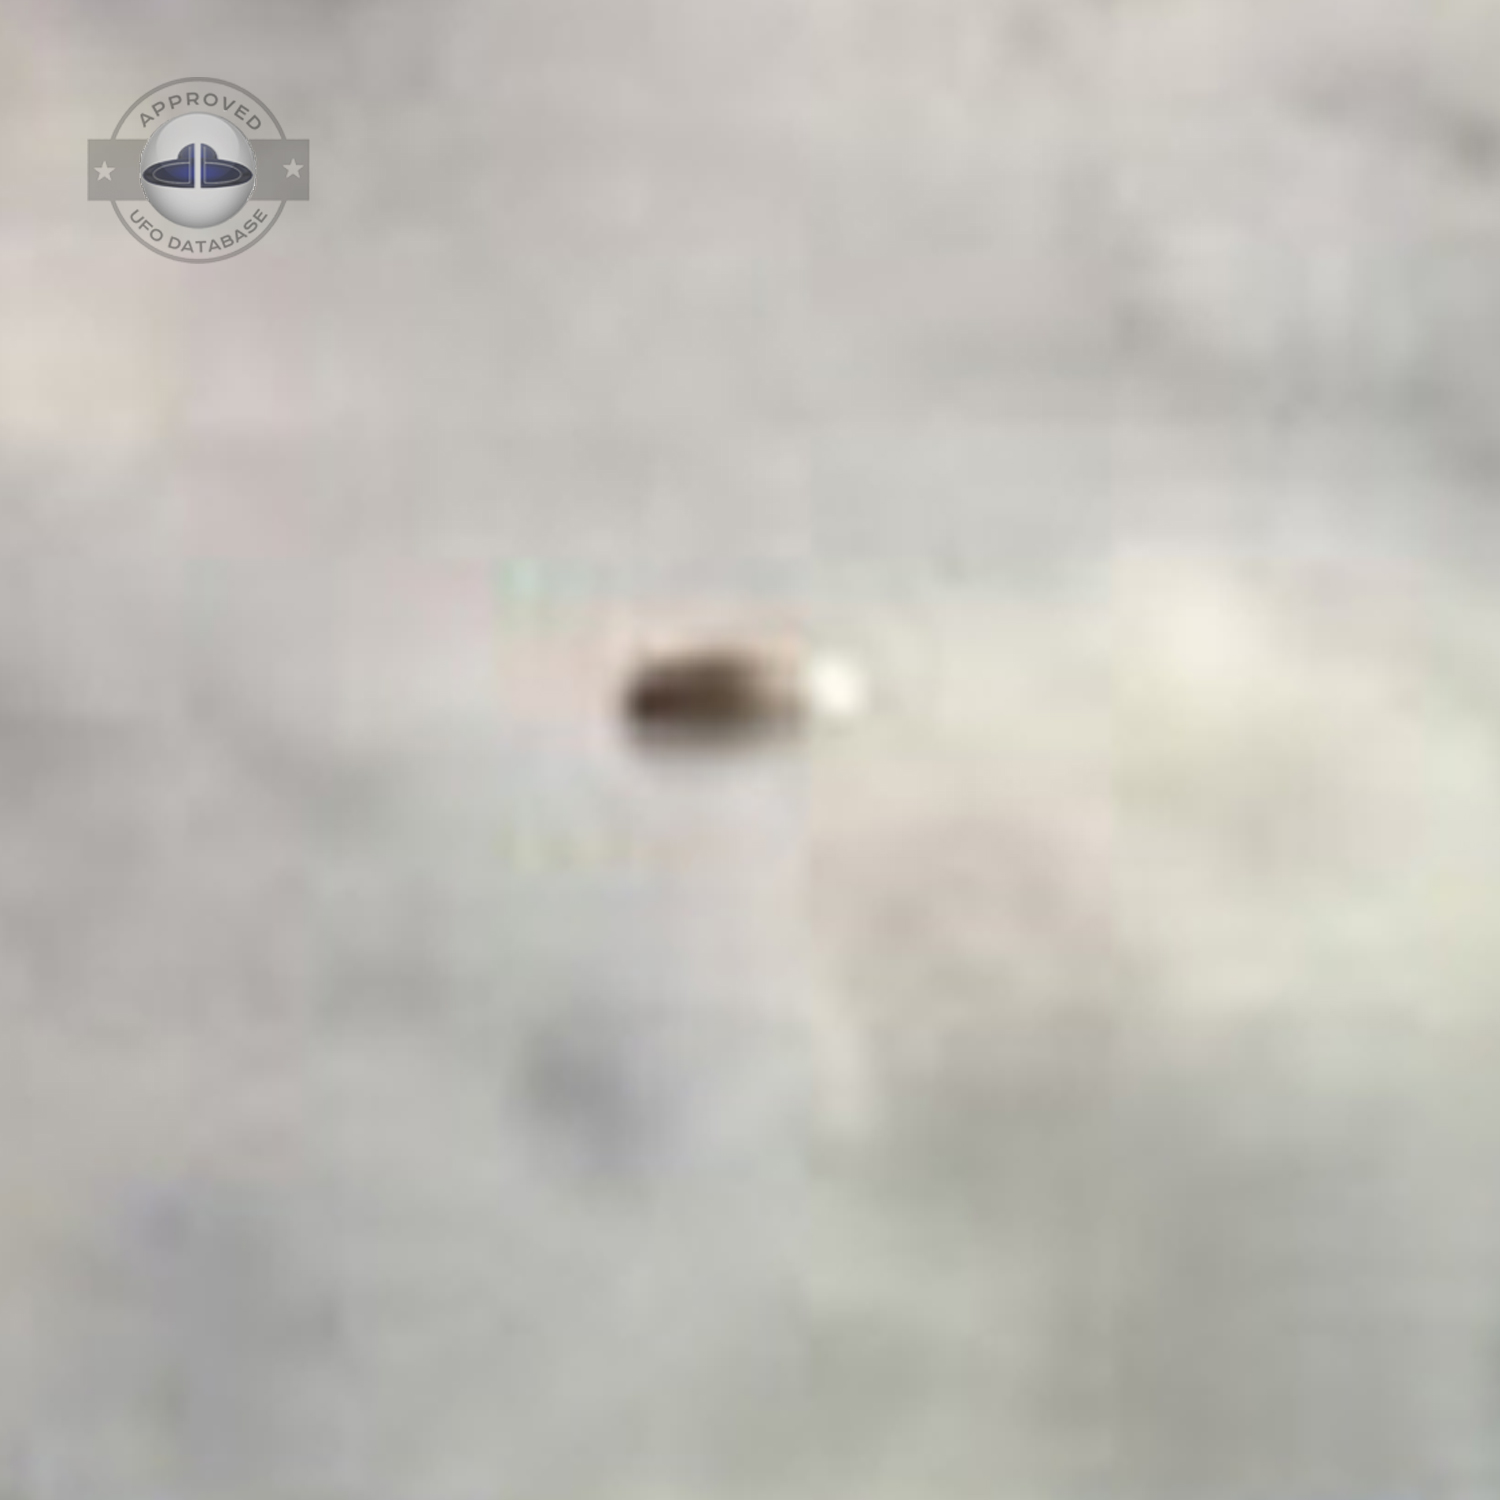 Rudi Nagora heard a strange noise and saw a shinning silver UFO UFO Picture #81-9